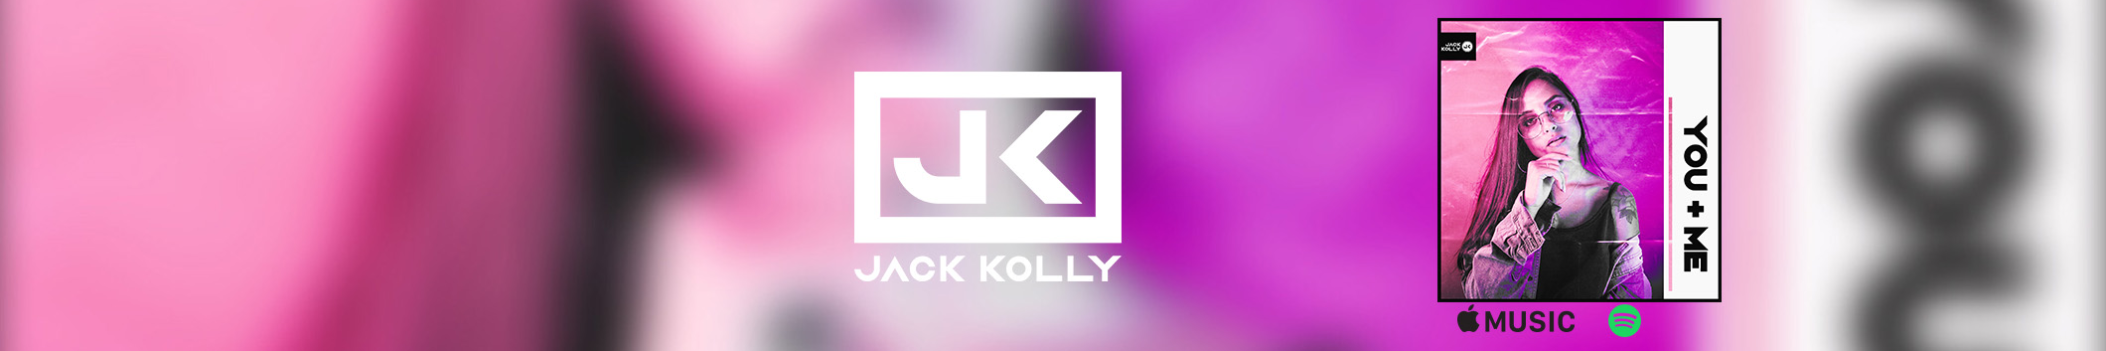 Jack Kolly